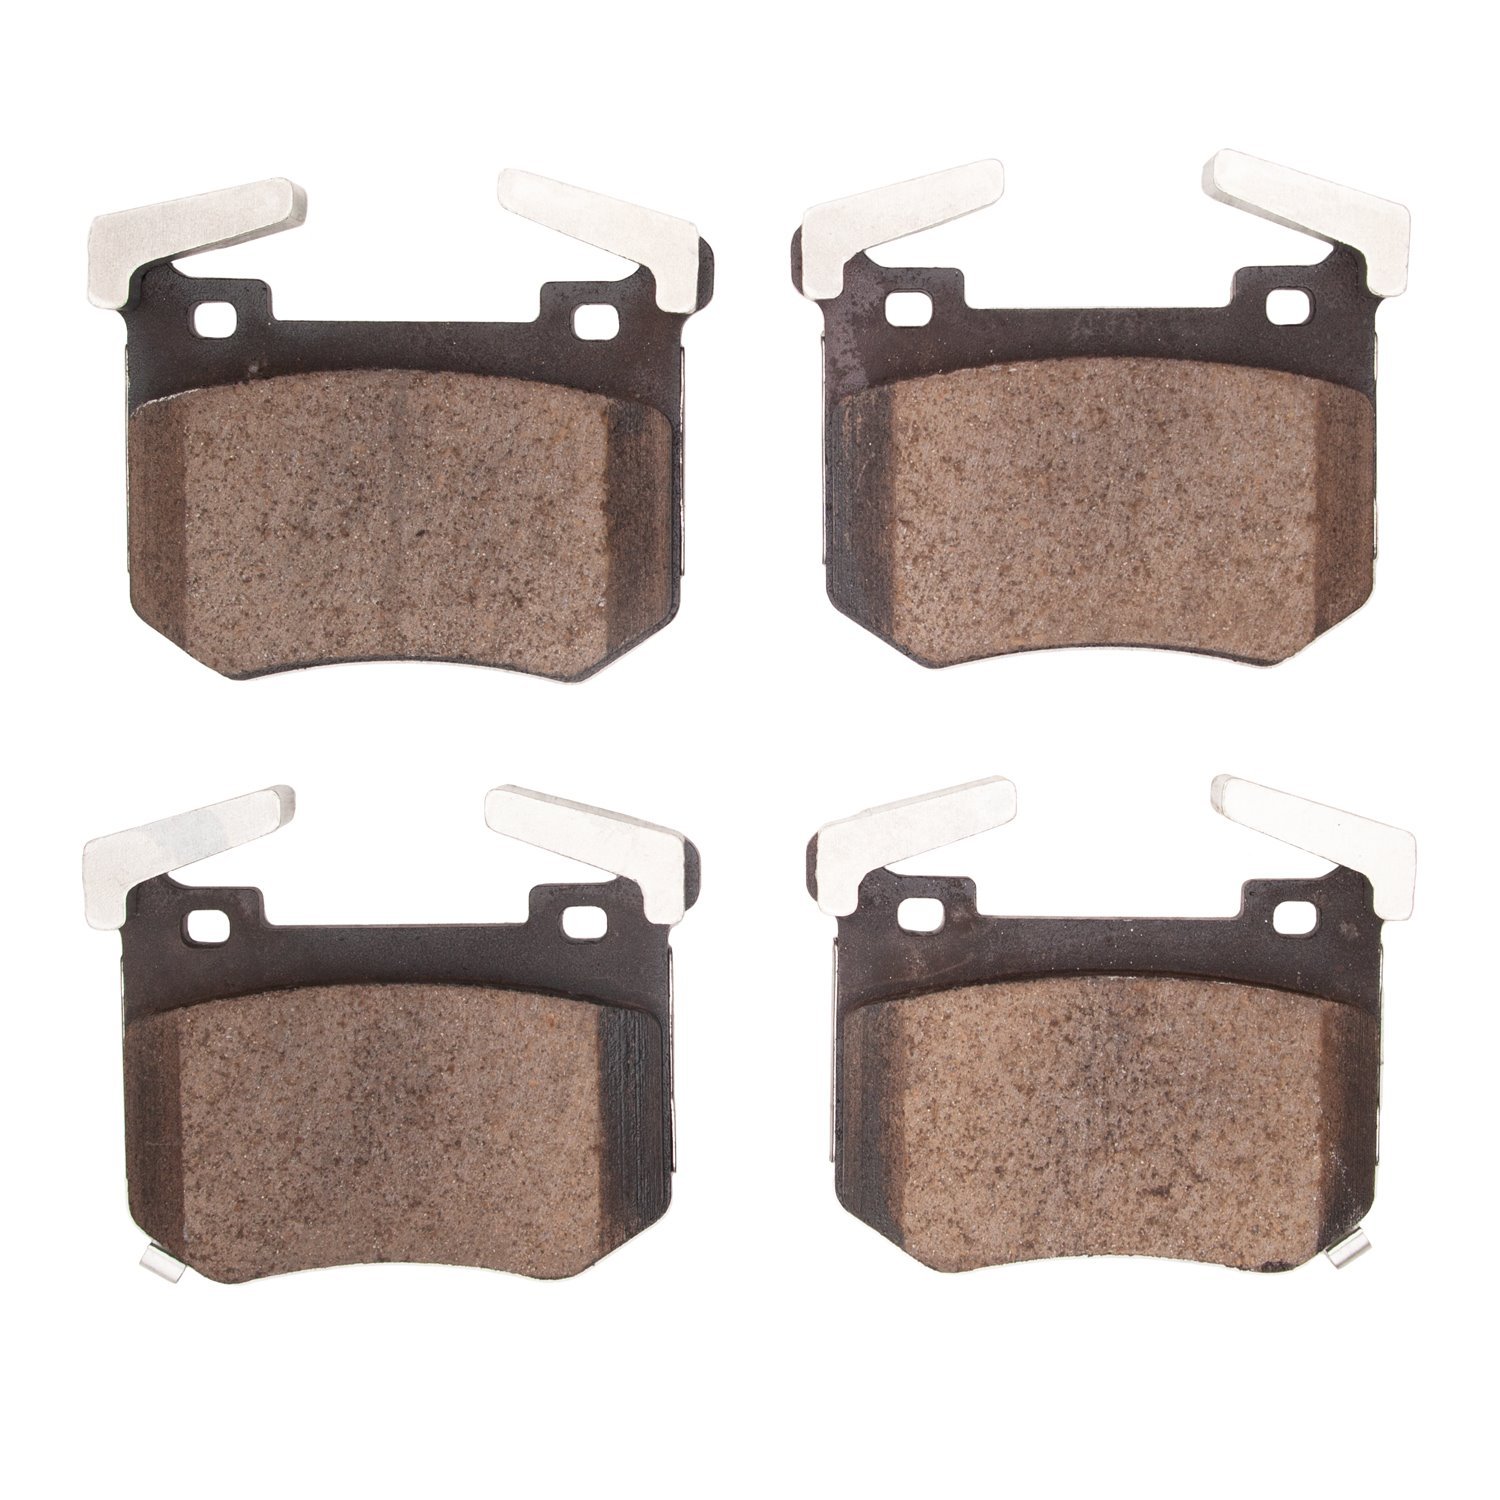 Ceramic Brake Pads, Fits Select Kia/Hyundai/Genesis, Position: Rear